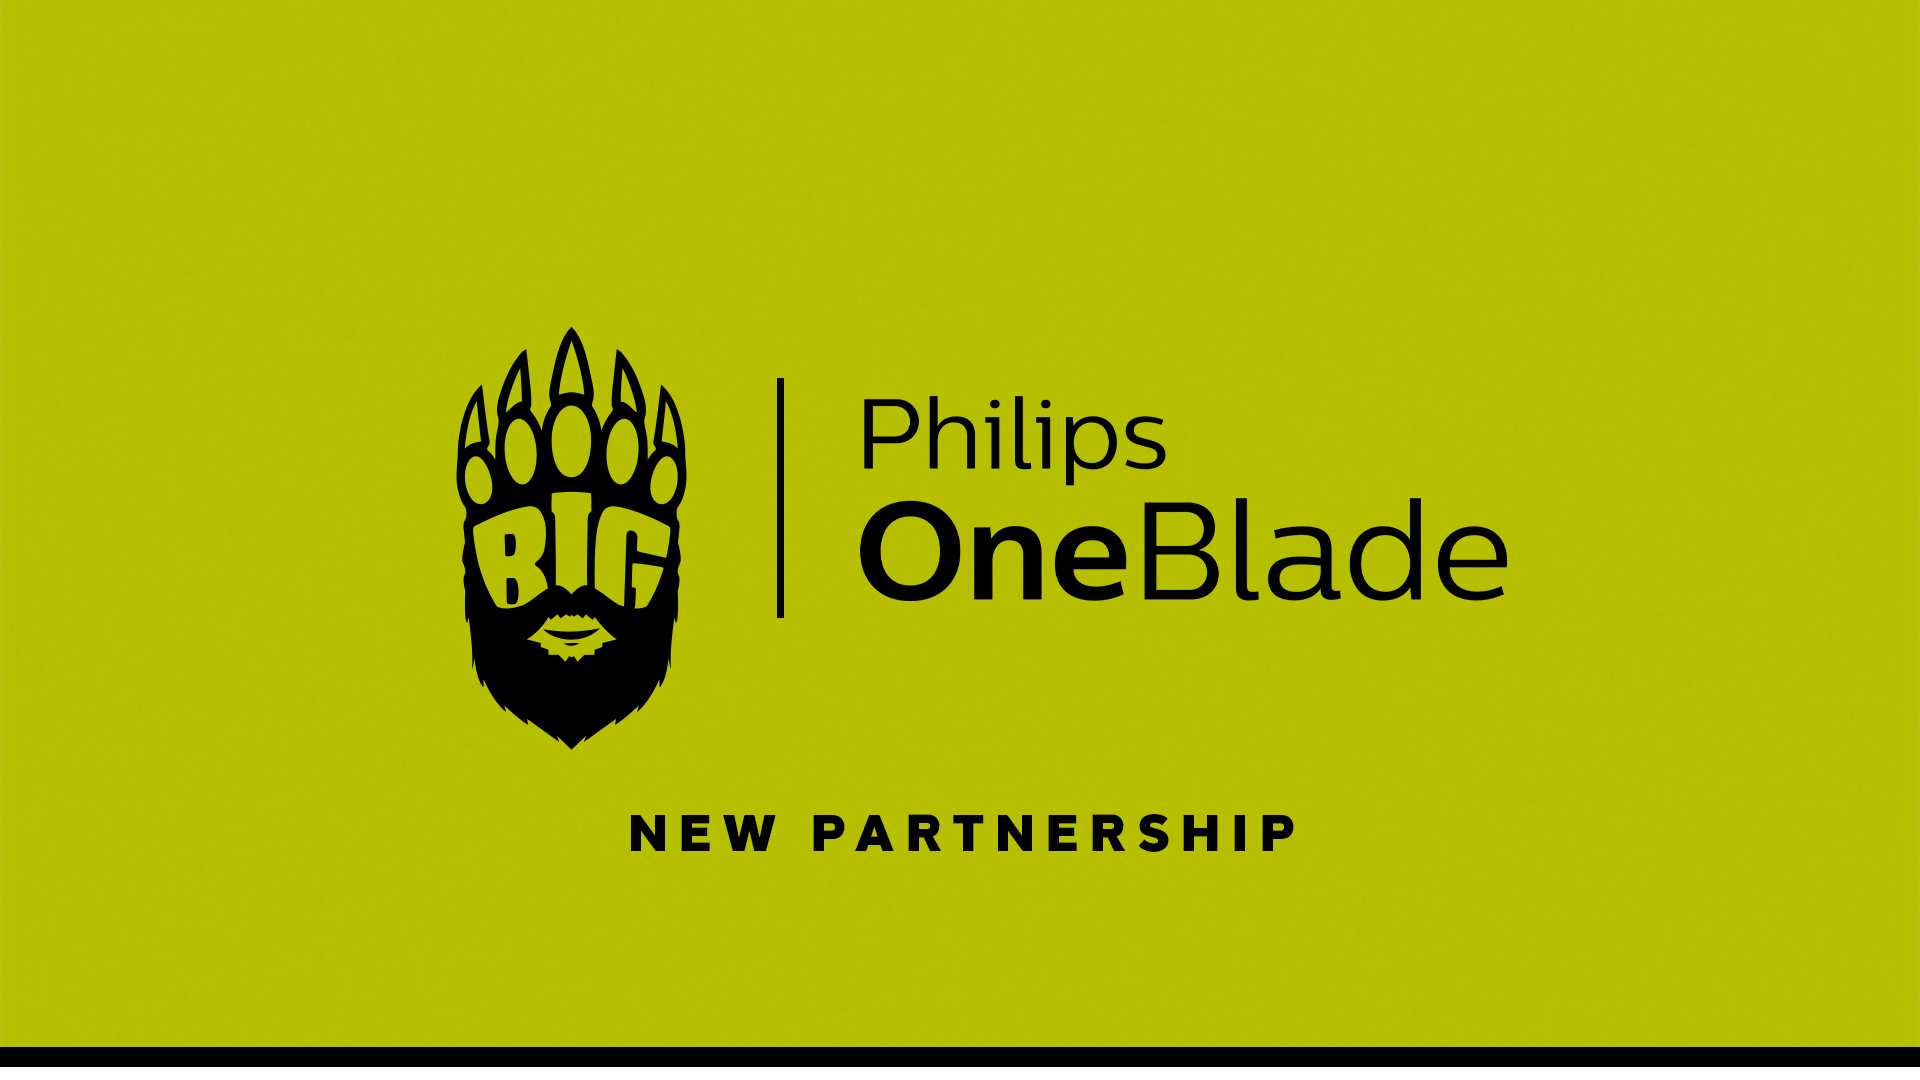 BIG partners with Philips OneBlade